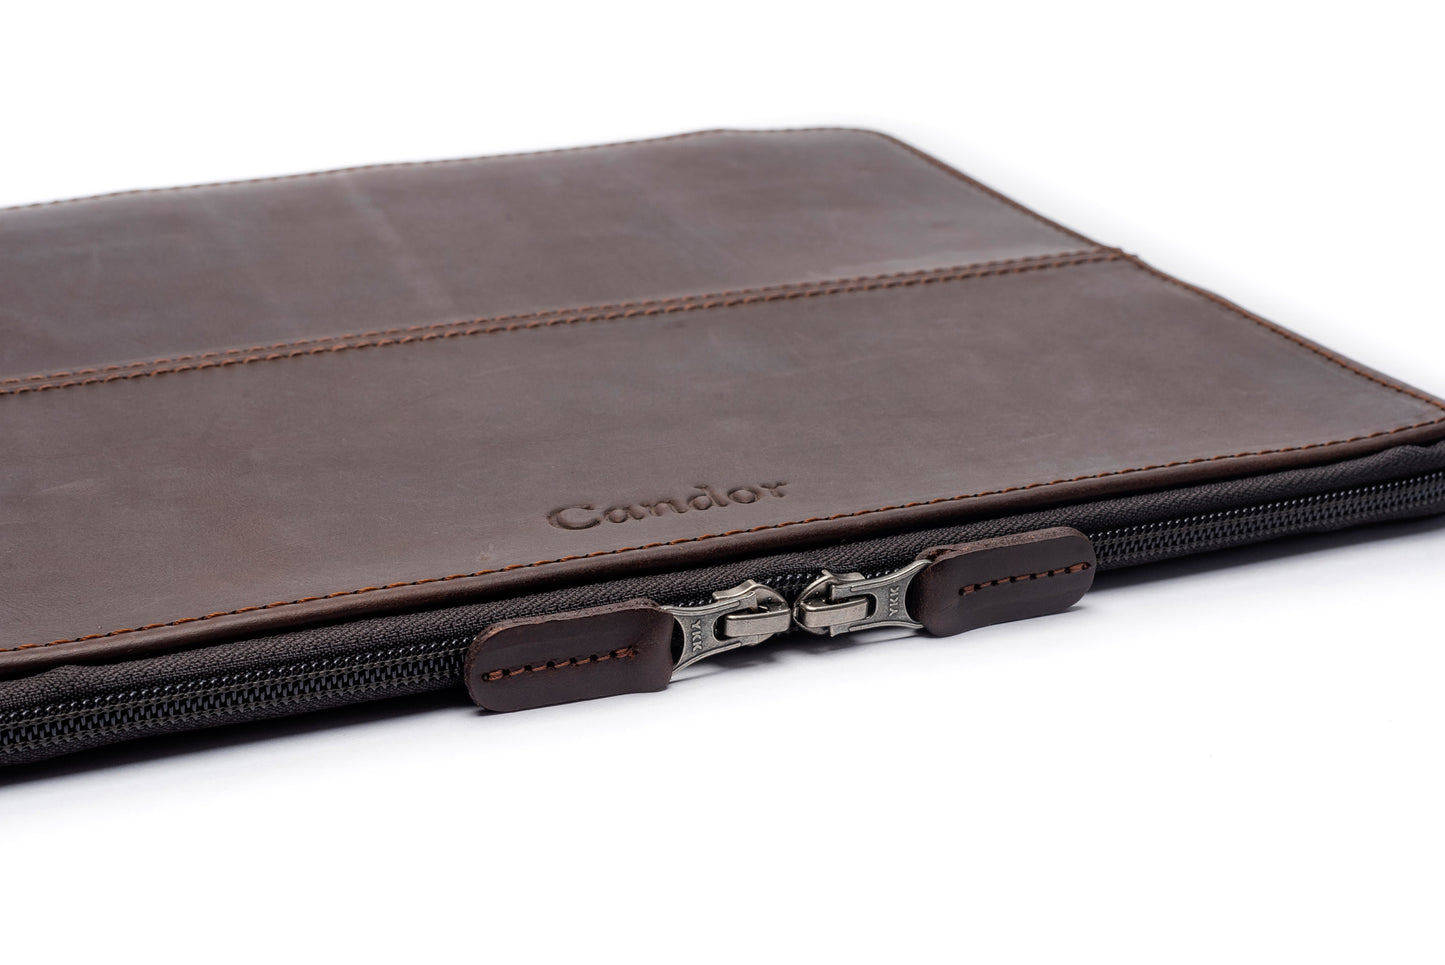 Leather Laptop Sleeve (Candor Full Grain)